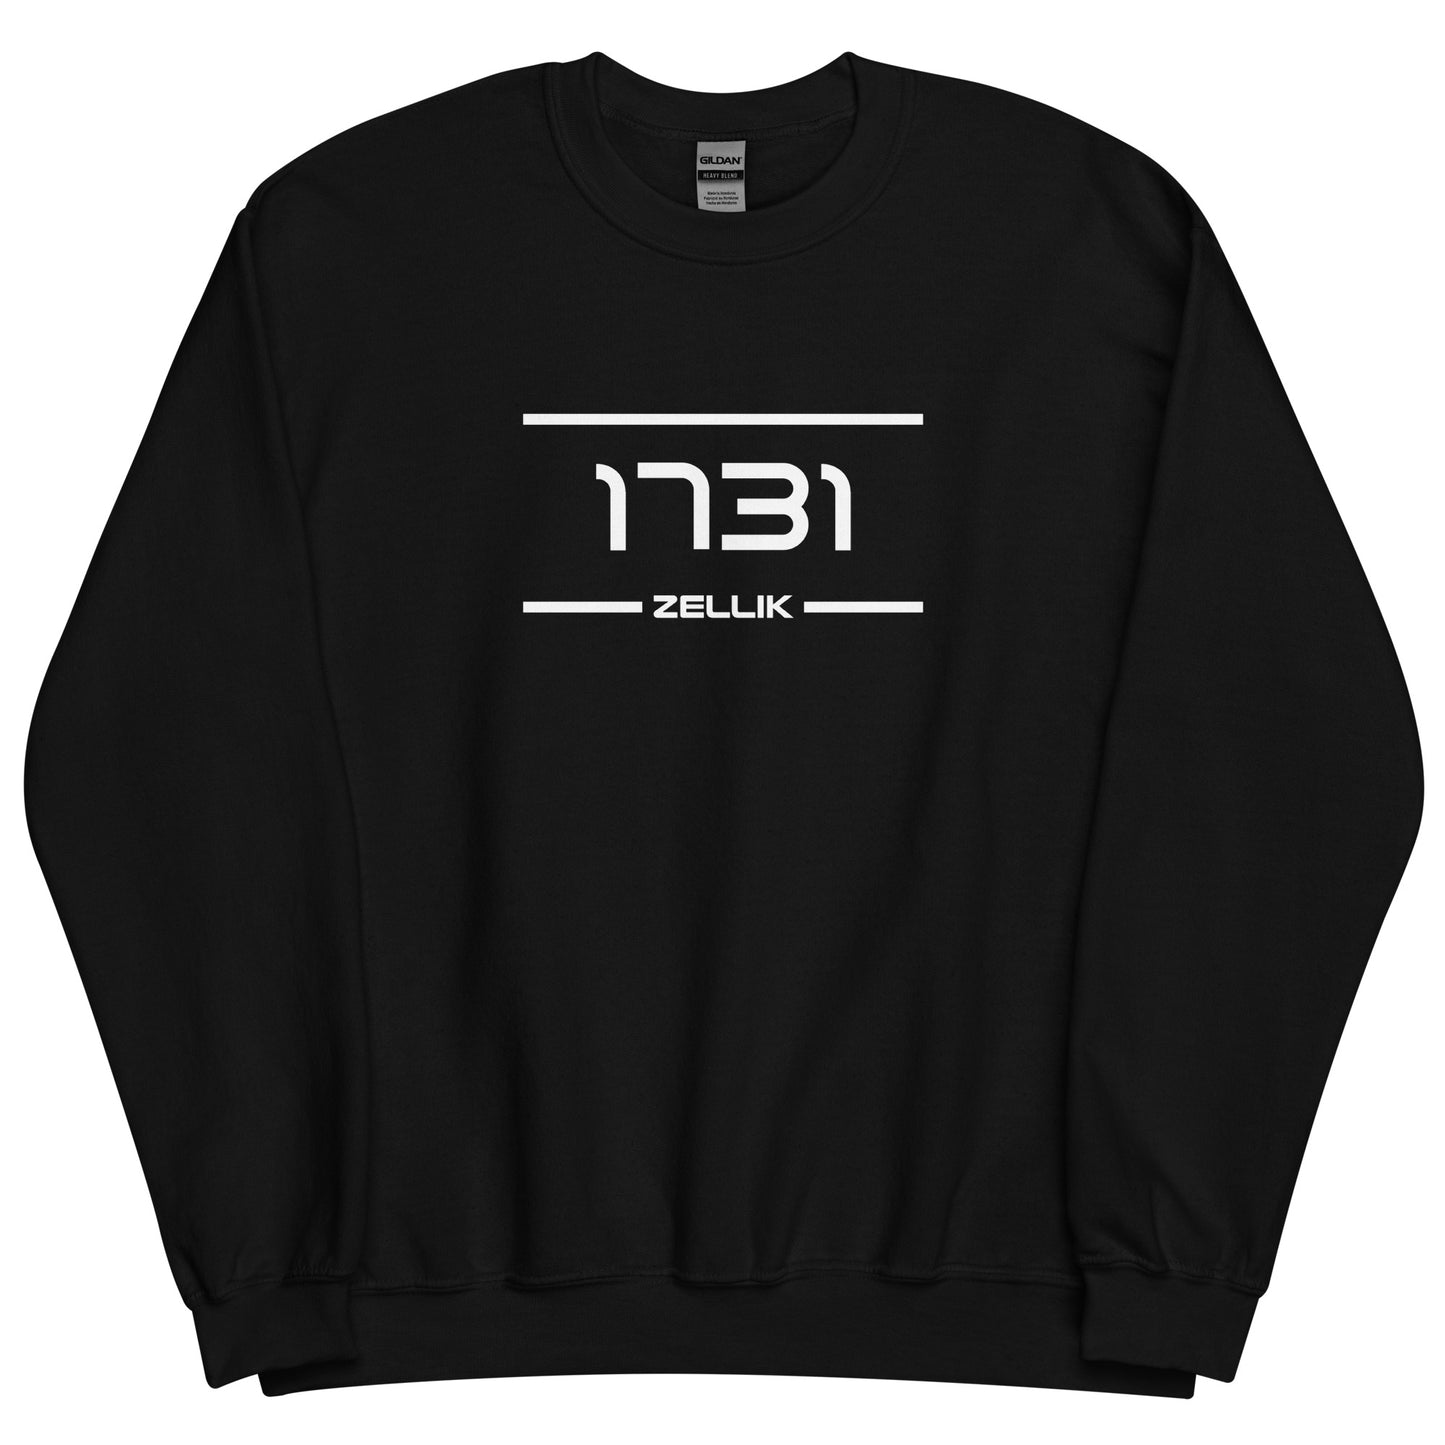 Sweater - 1731 - Zellik (M/V)